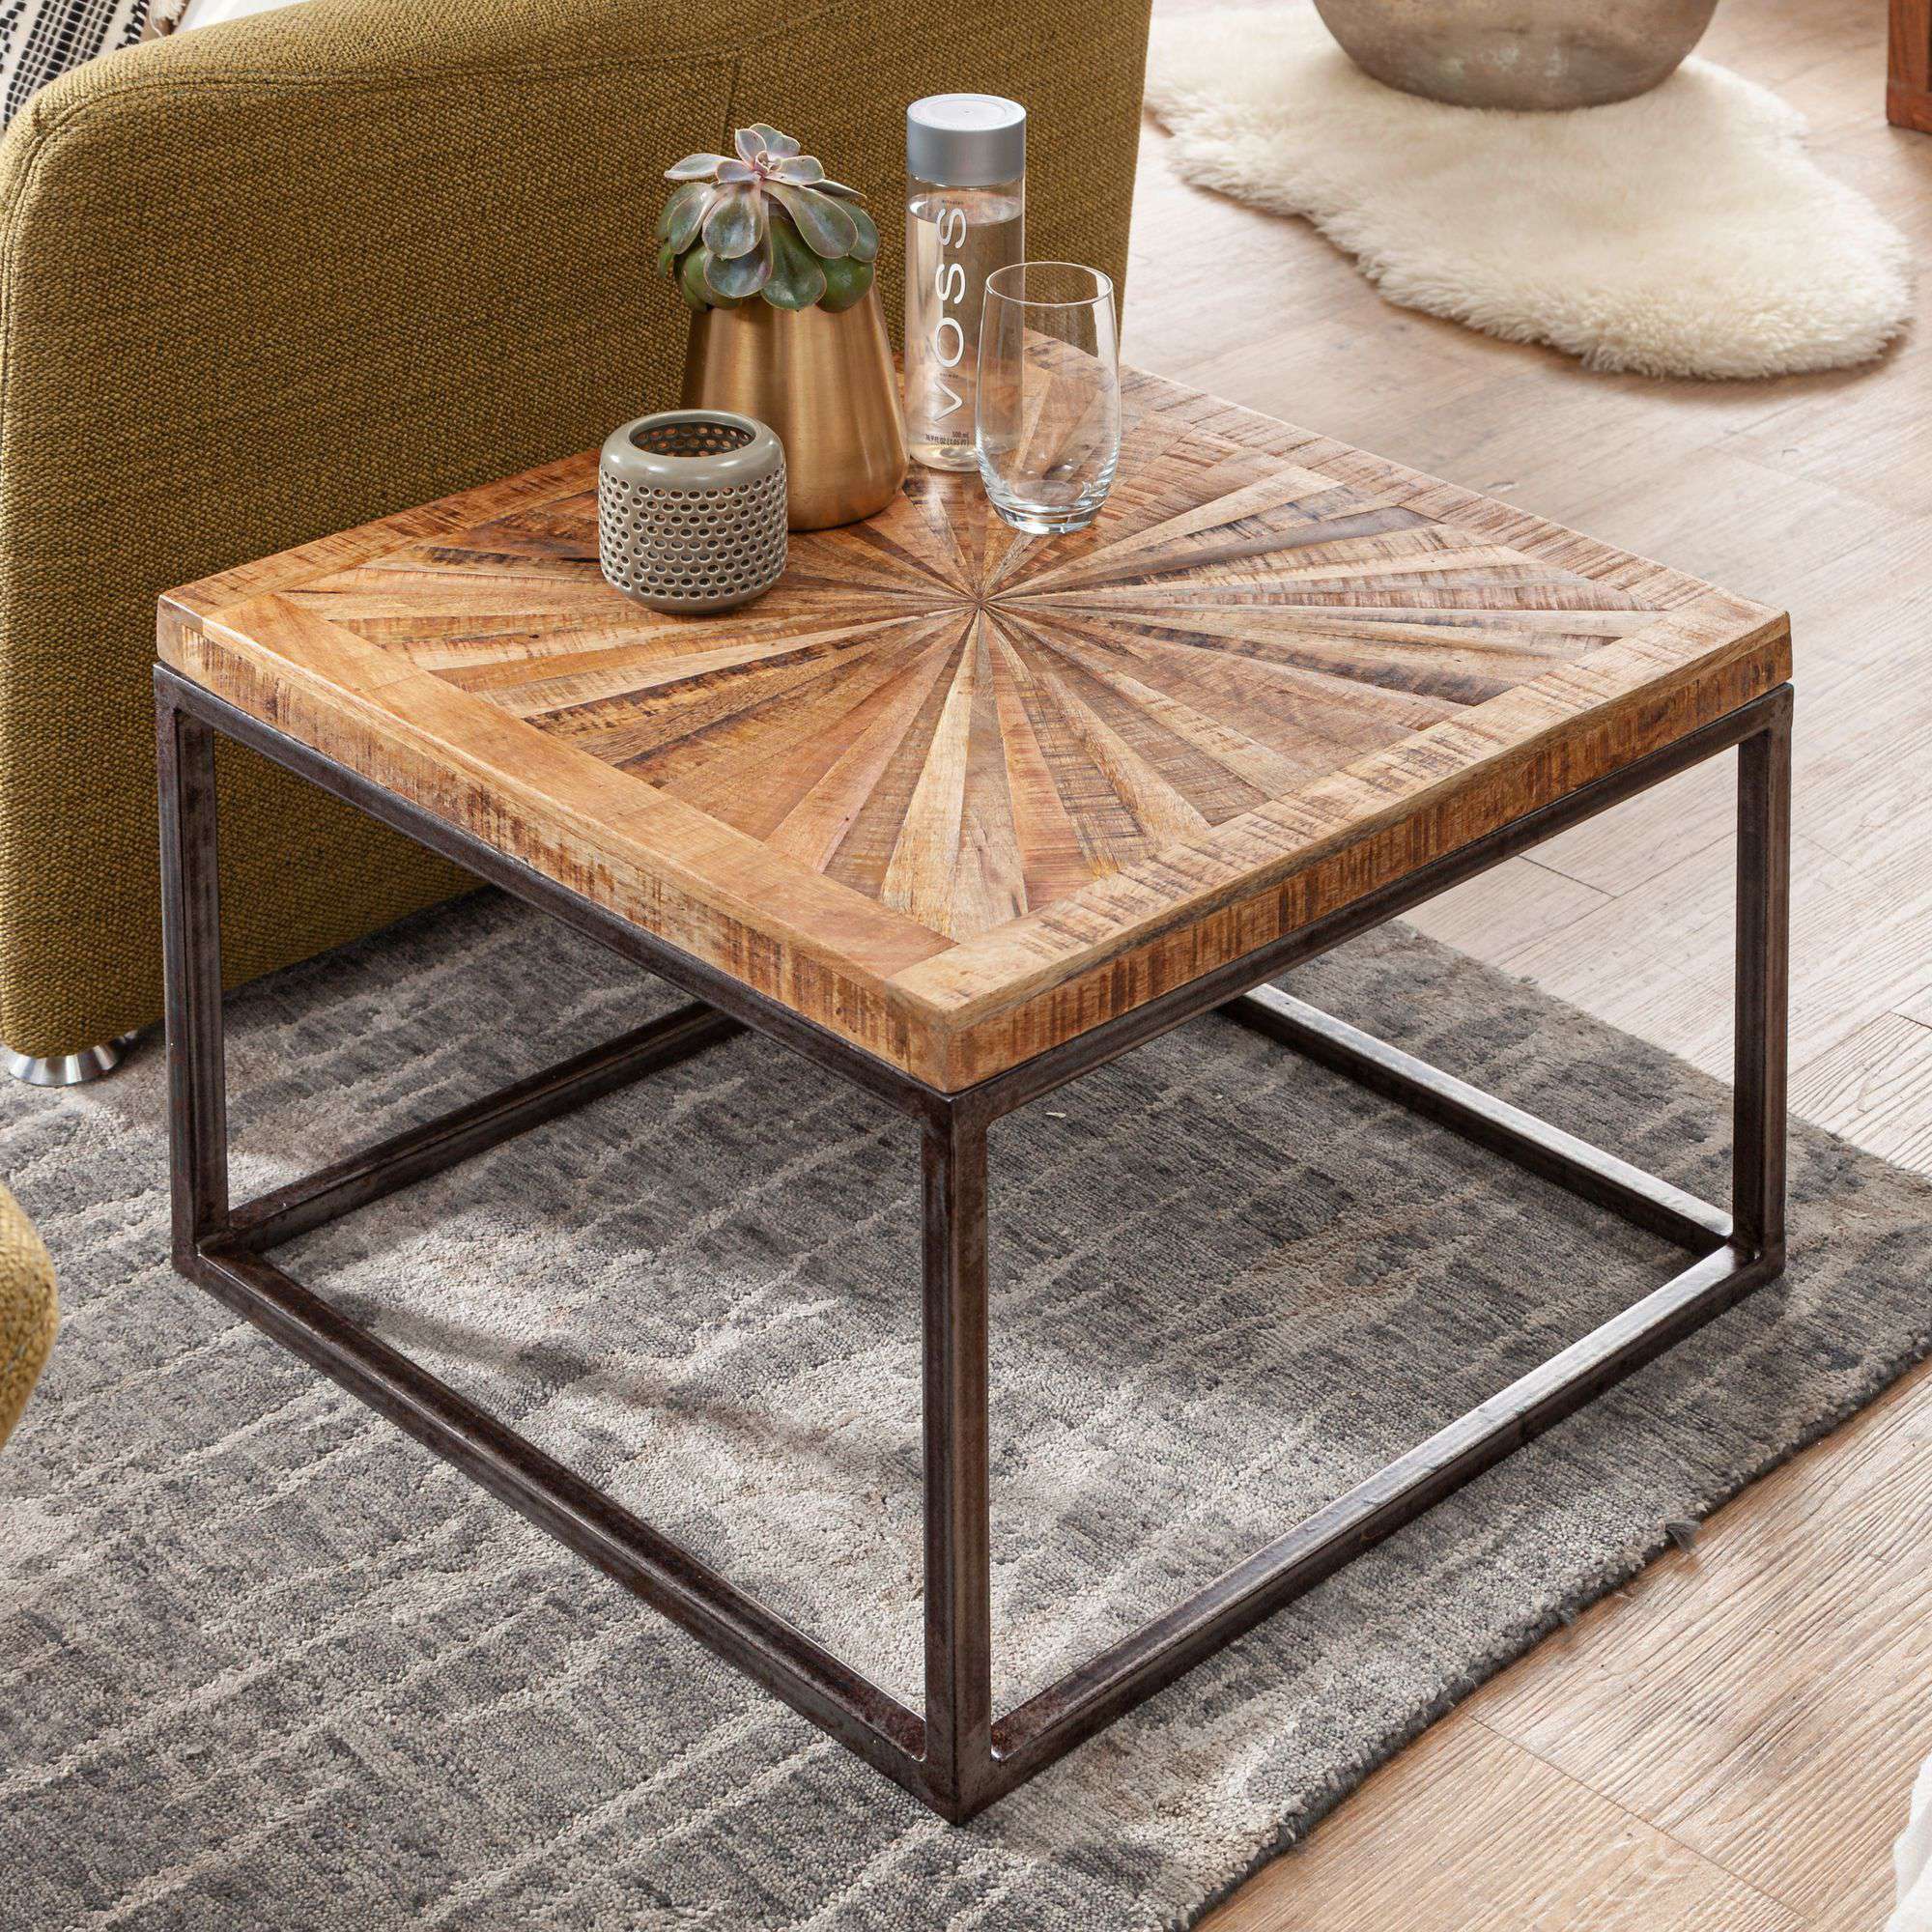 Nancy's Industrial Coffee Table - Mango Wood - Coffee Table - Side Table - Coffee Tables - 55 x 55 cm